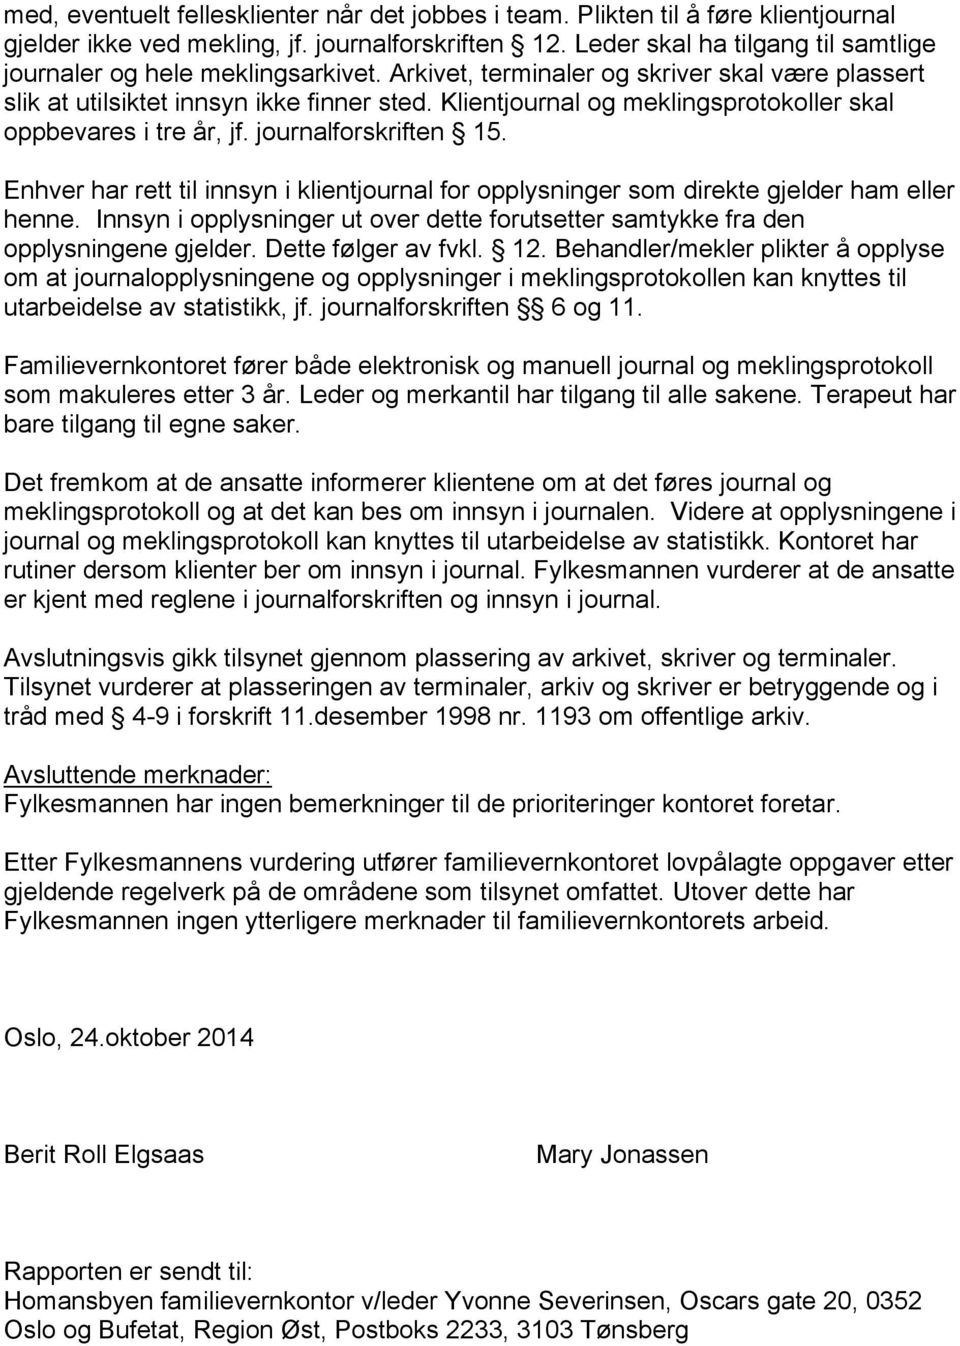 Fylkesmannen i Oslo og Akershus RAPPORT FRA TILSYN MED HOMANSBYEN  FAMILIEVERNKONTOR - PDF Free Download